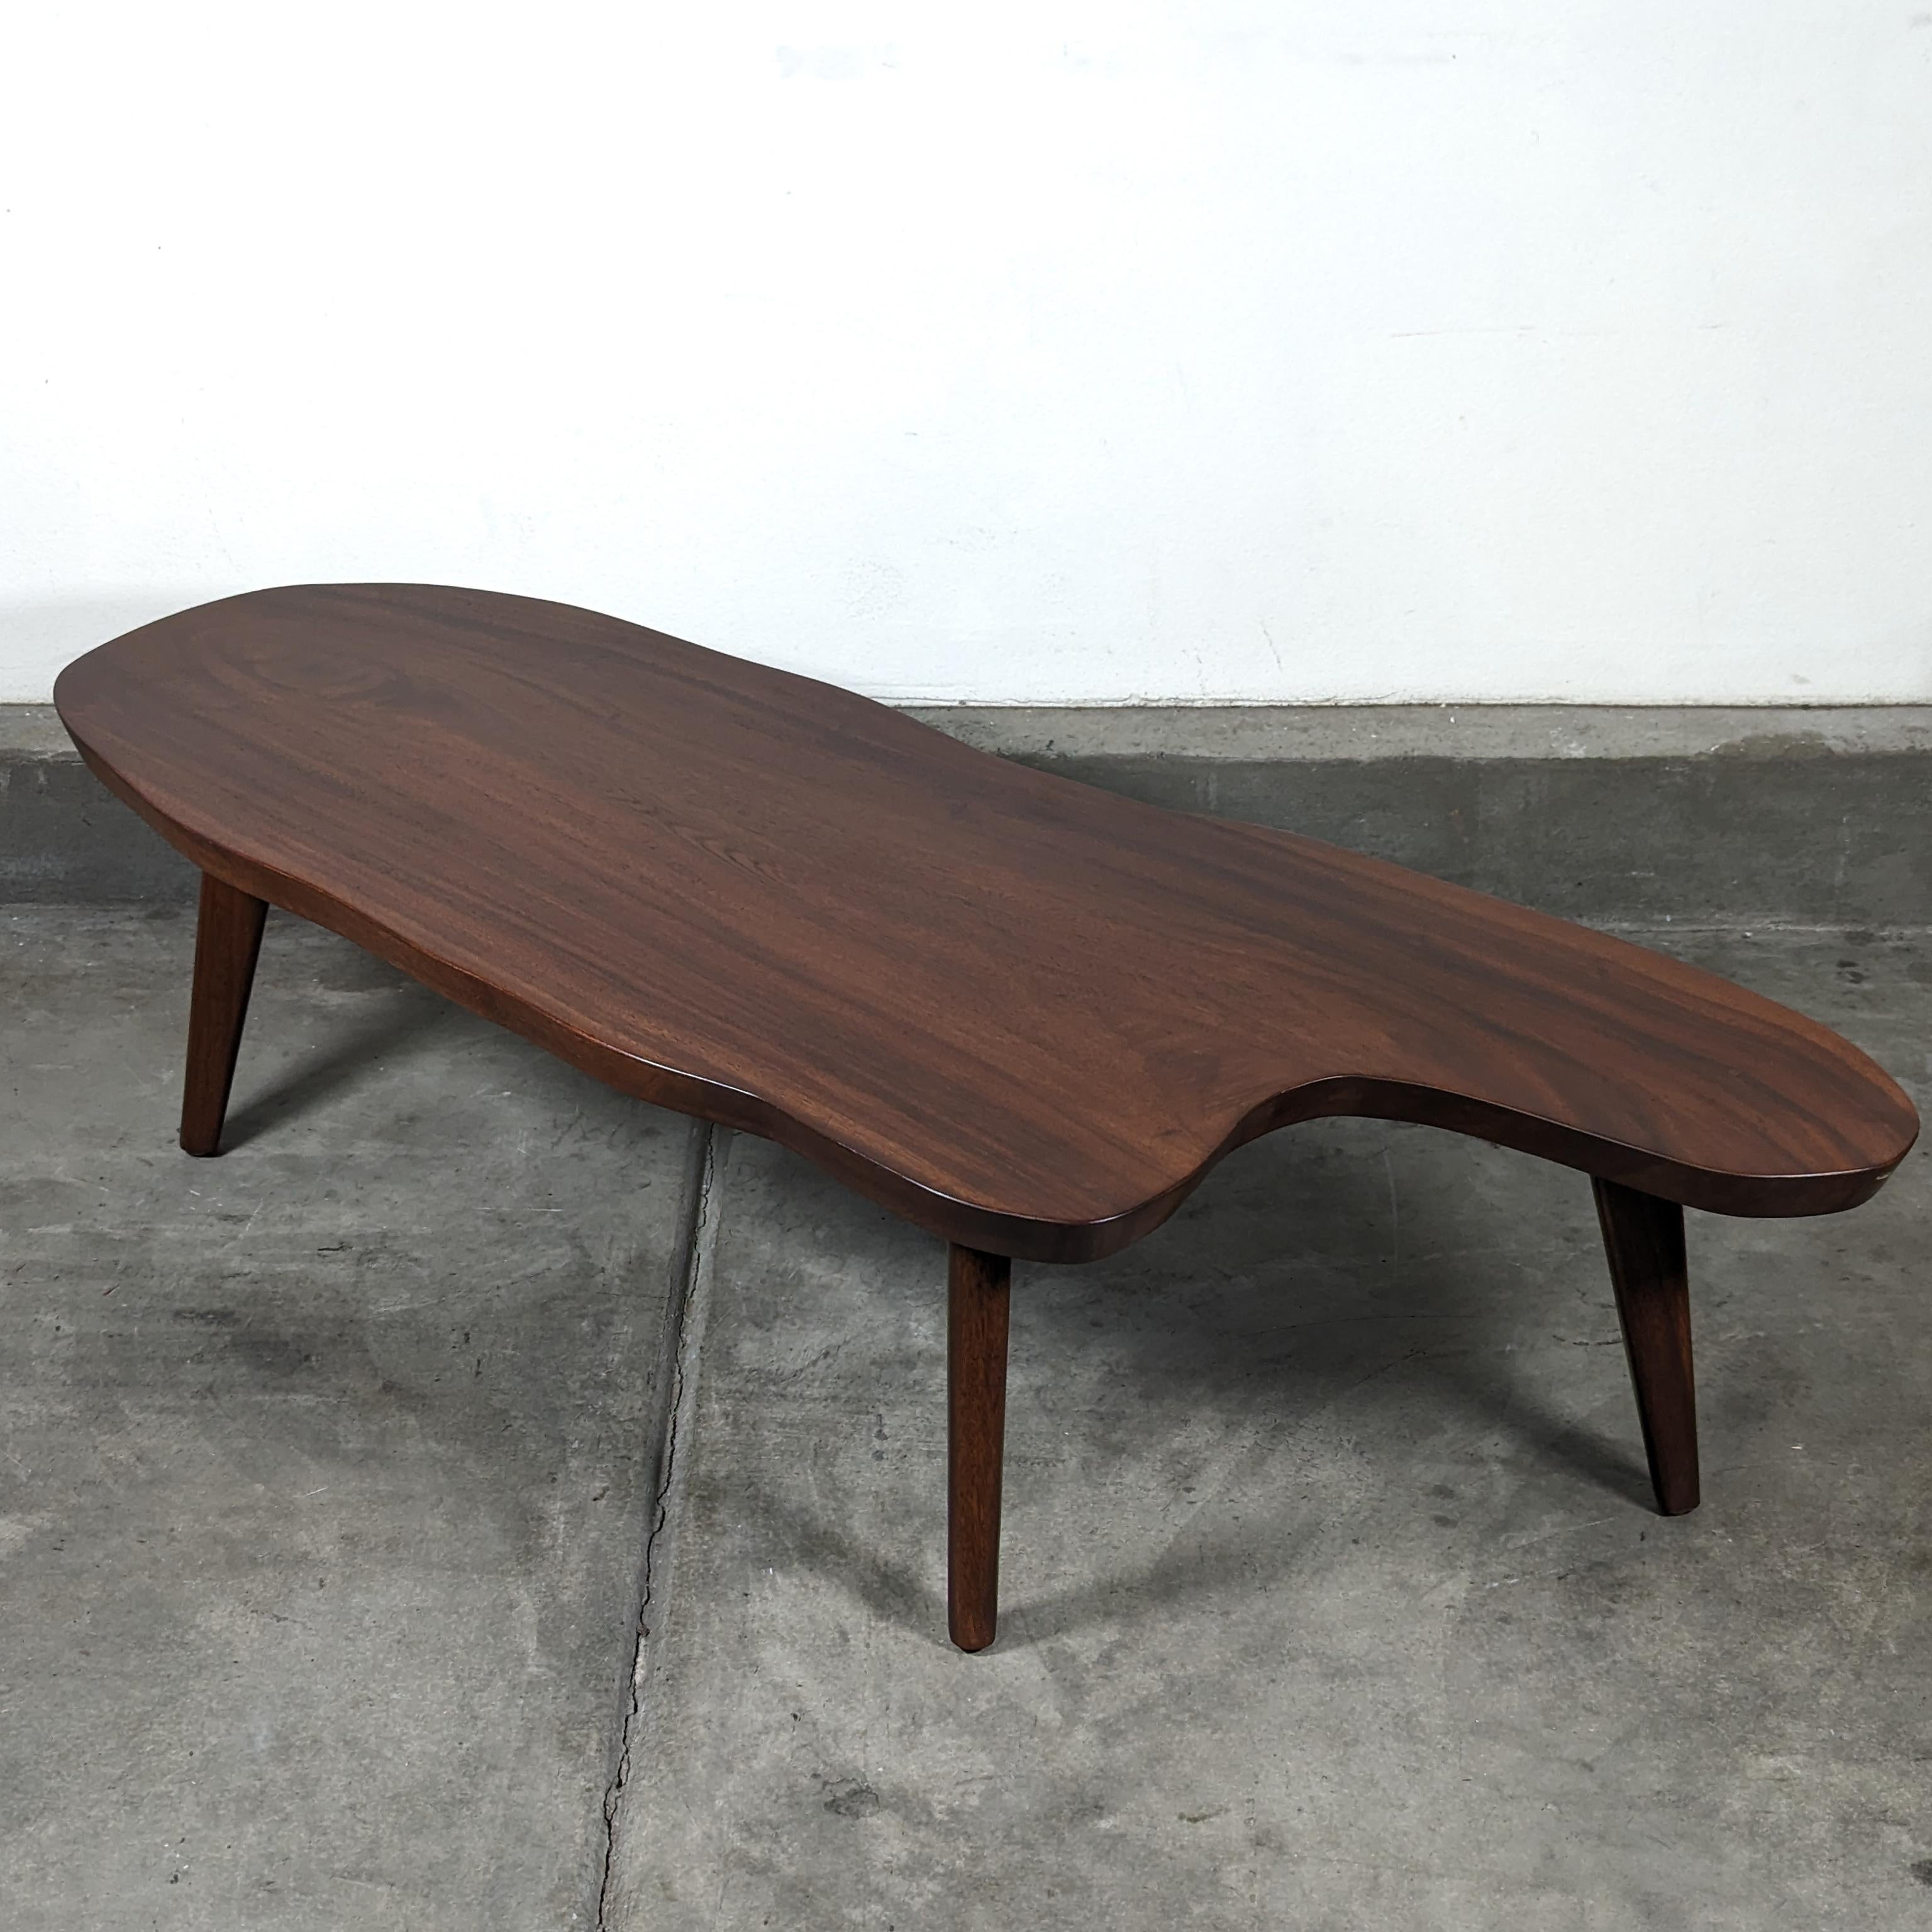 Irregular Shaped Mid Century Modern Mokey Pod Coffee Table 1